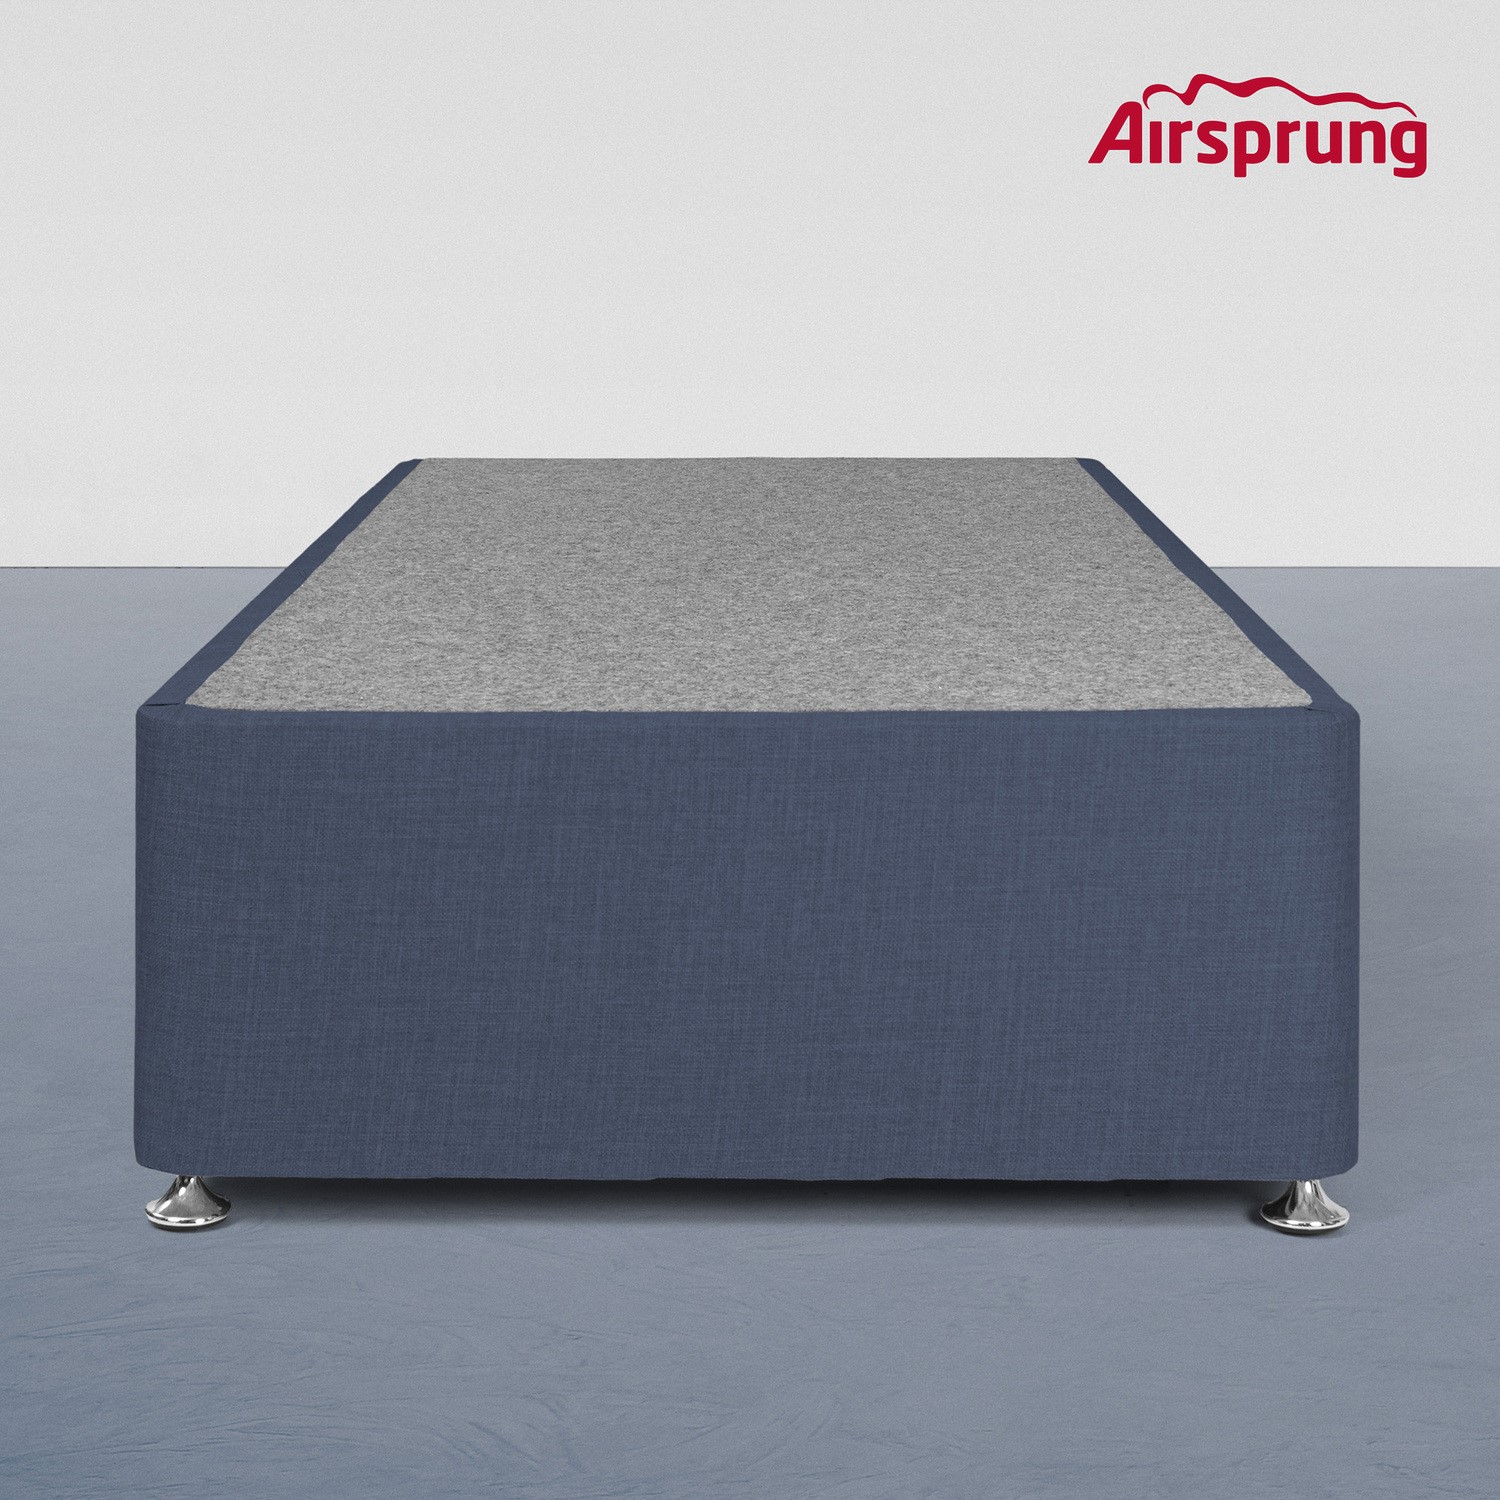 Read more about Airsprung kelston single 2 drawer divan midnight blue